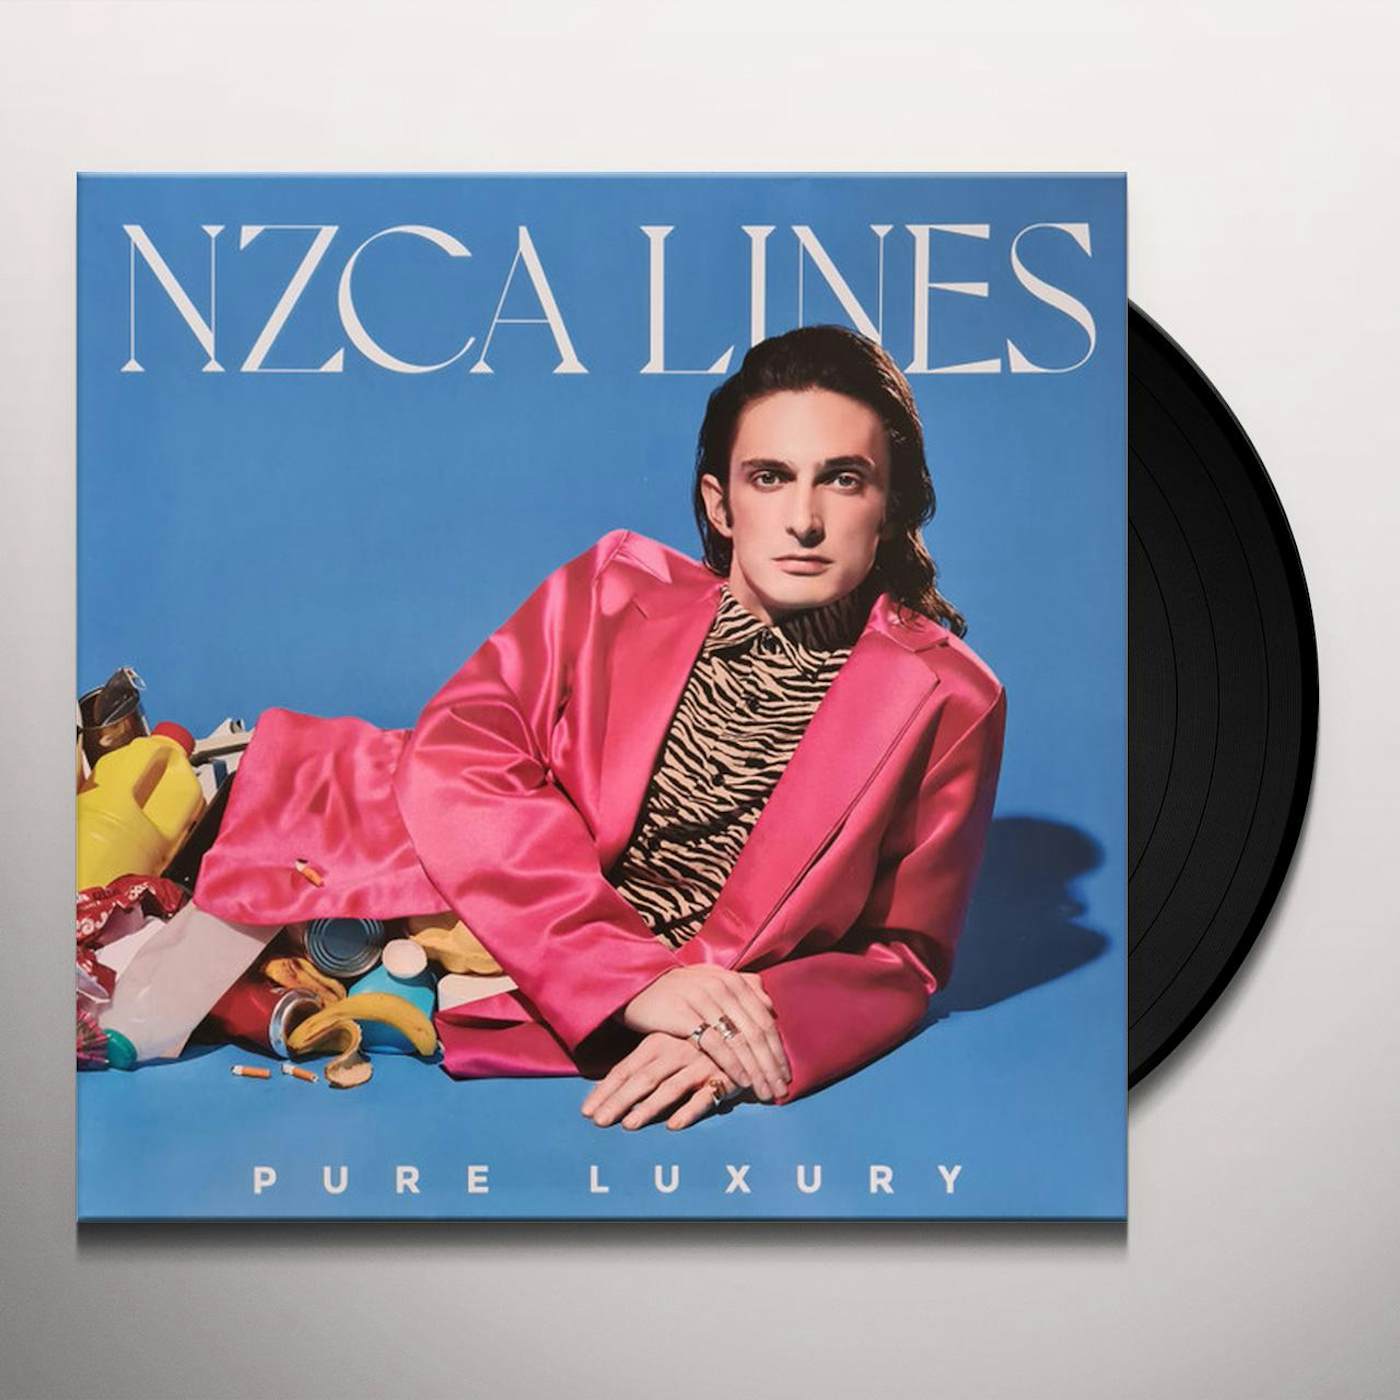 NZCA LINES PURE LUXURY (DL CARD) Vinyl Record